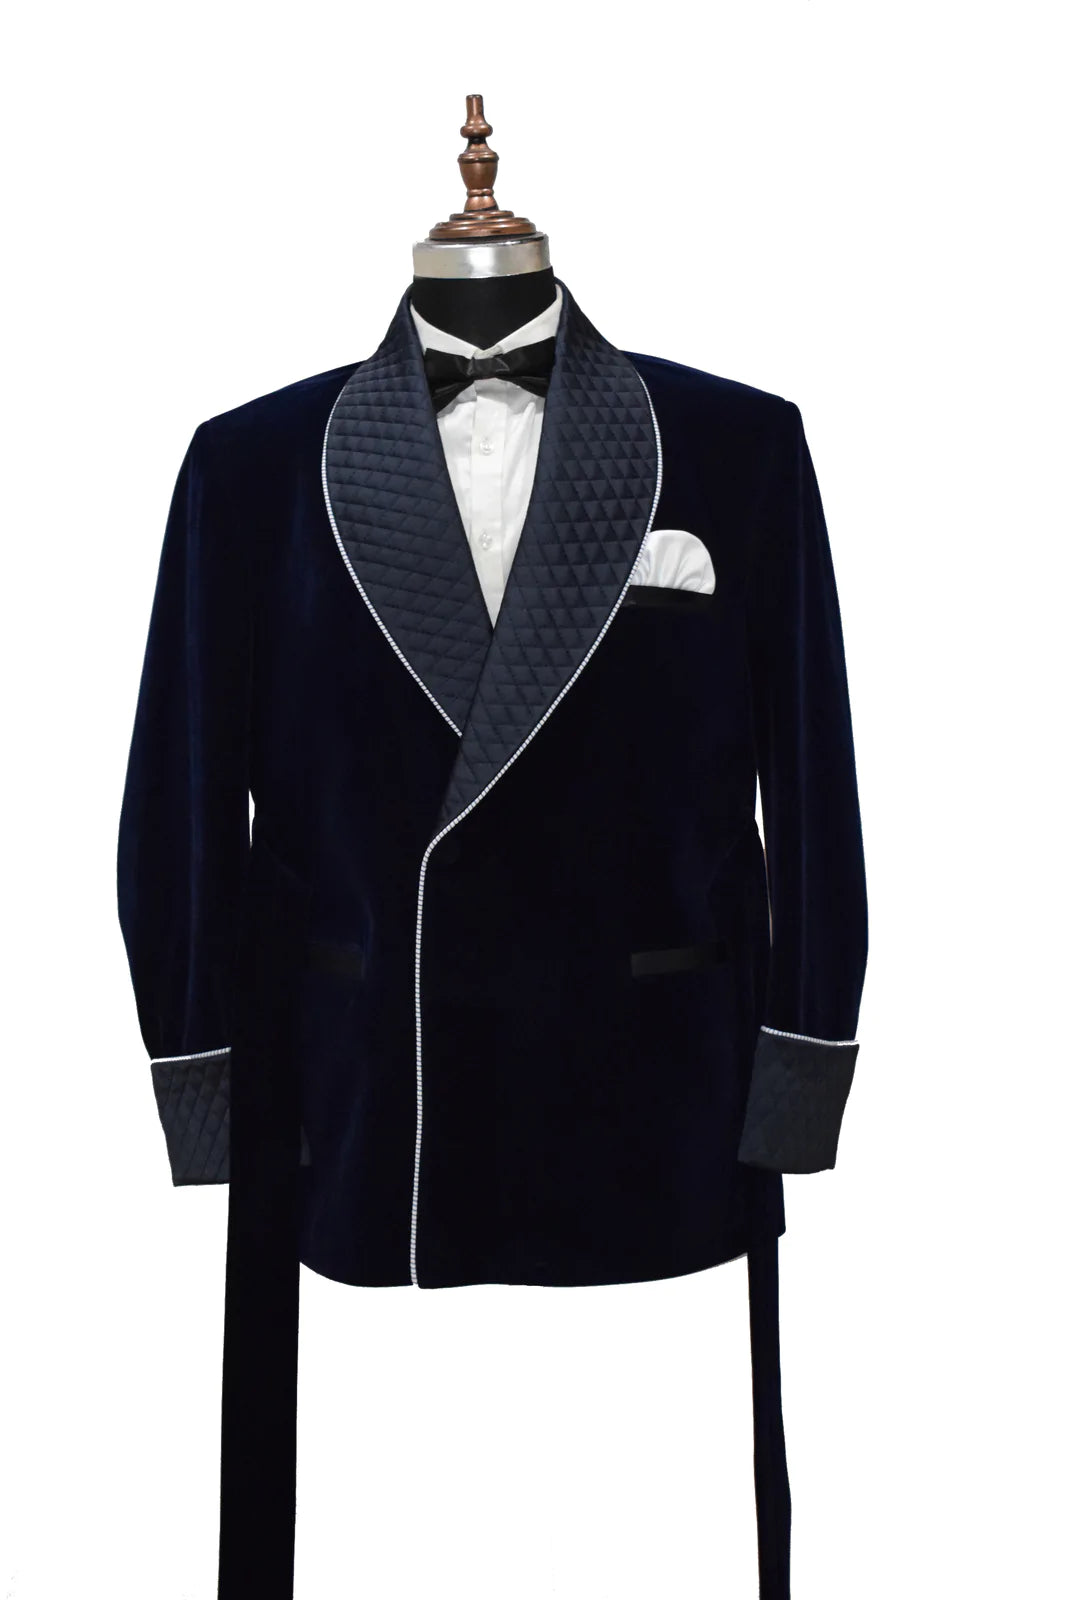 Mens Black Smoking Jackets Luxury Stylish Blue Quilted Blazer